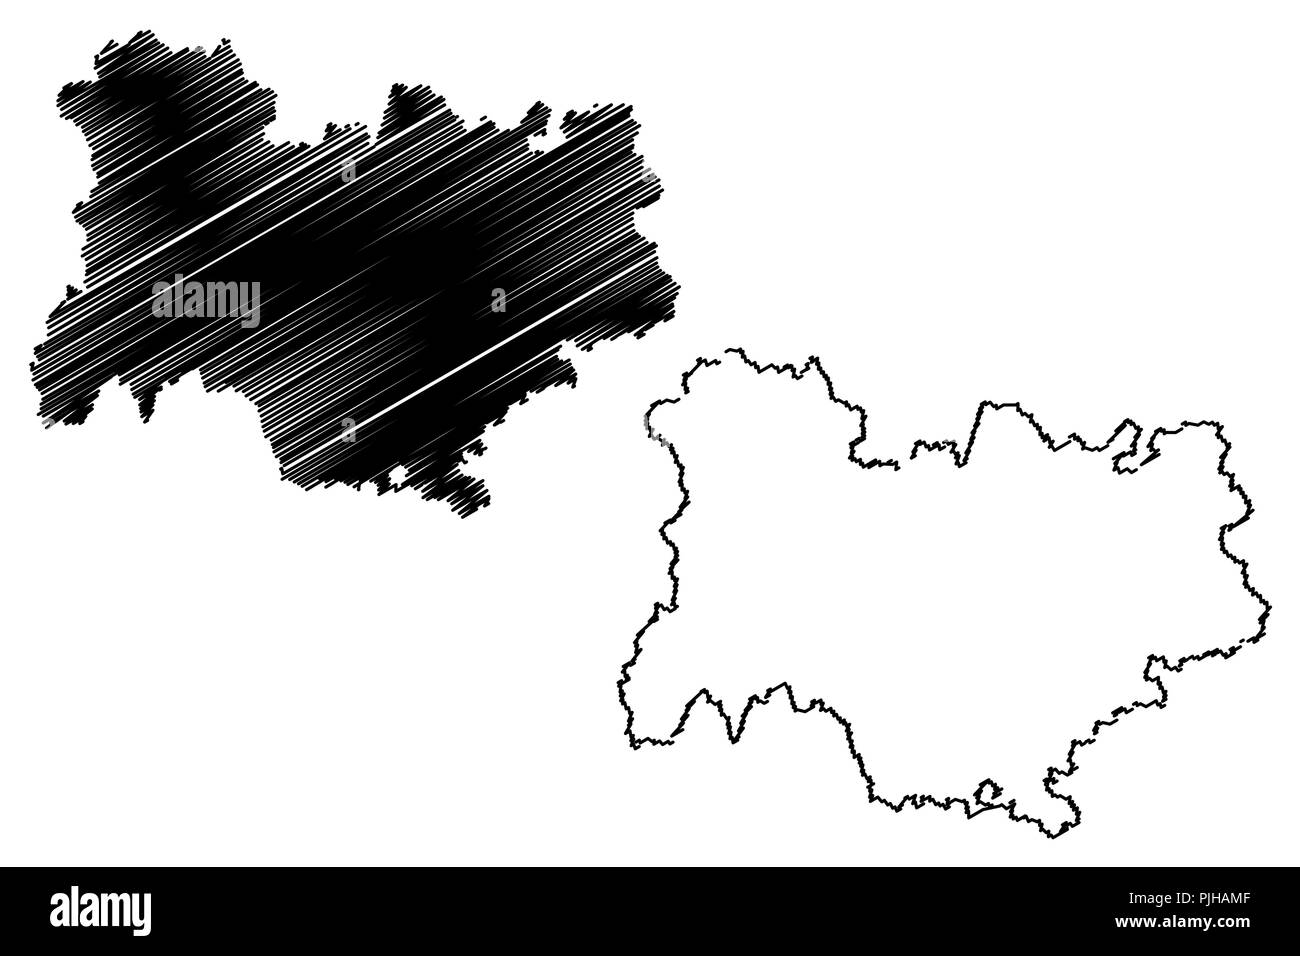 Auvergne-Rhone-Alpes (Frankreich, administrative Region) Karte Vektor-illustration, kritzeln Skizze Auvergne-Rhone-Alpes Karte Stock Vektor